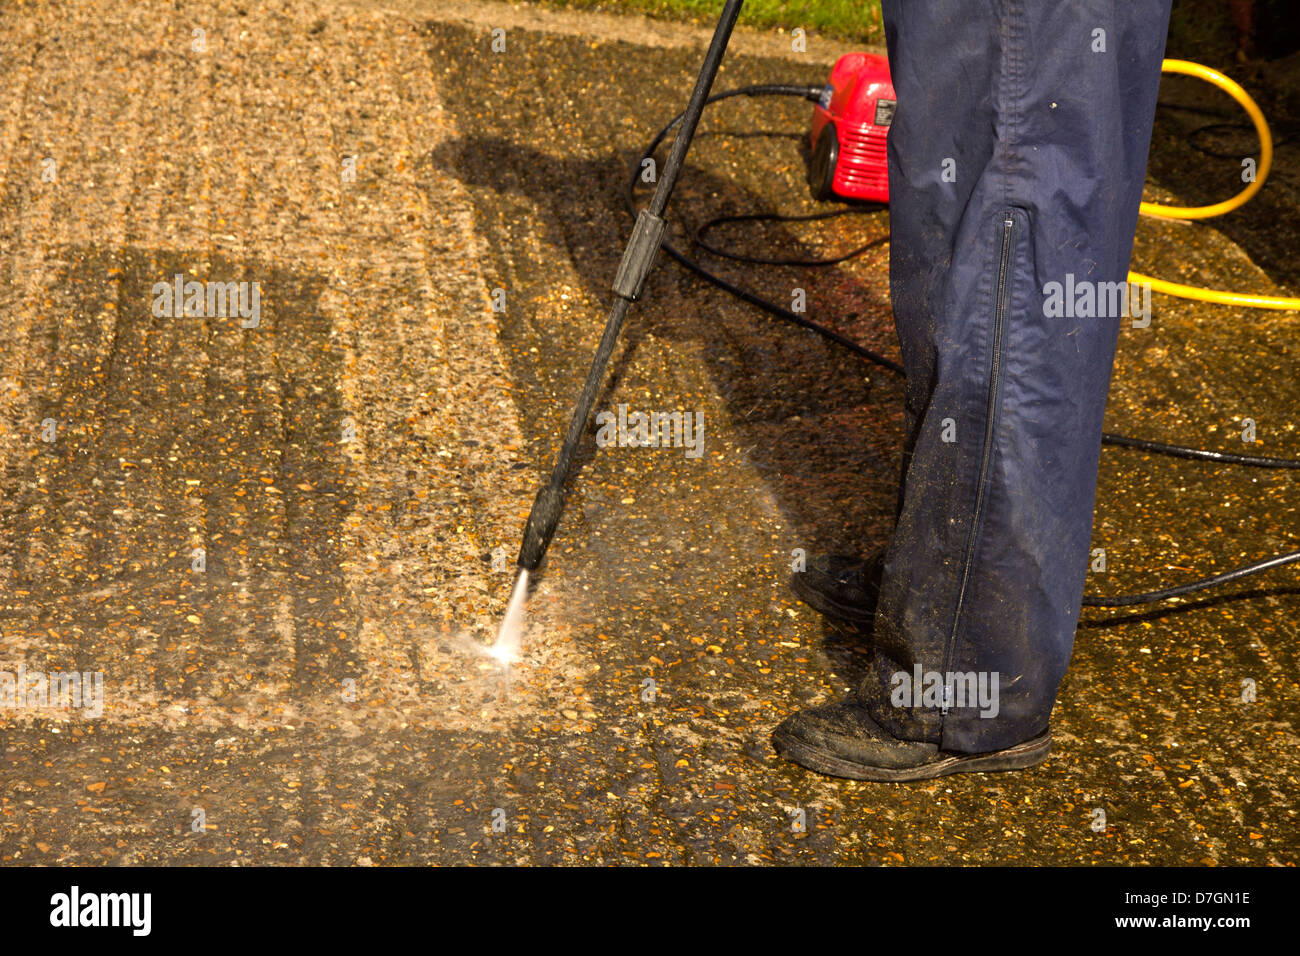 Pressure washing a concrete driveway Stock Photo